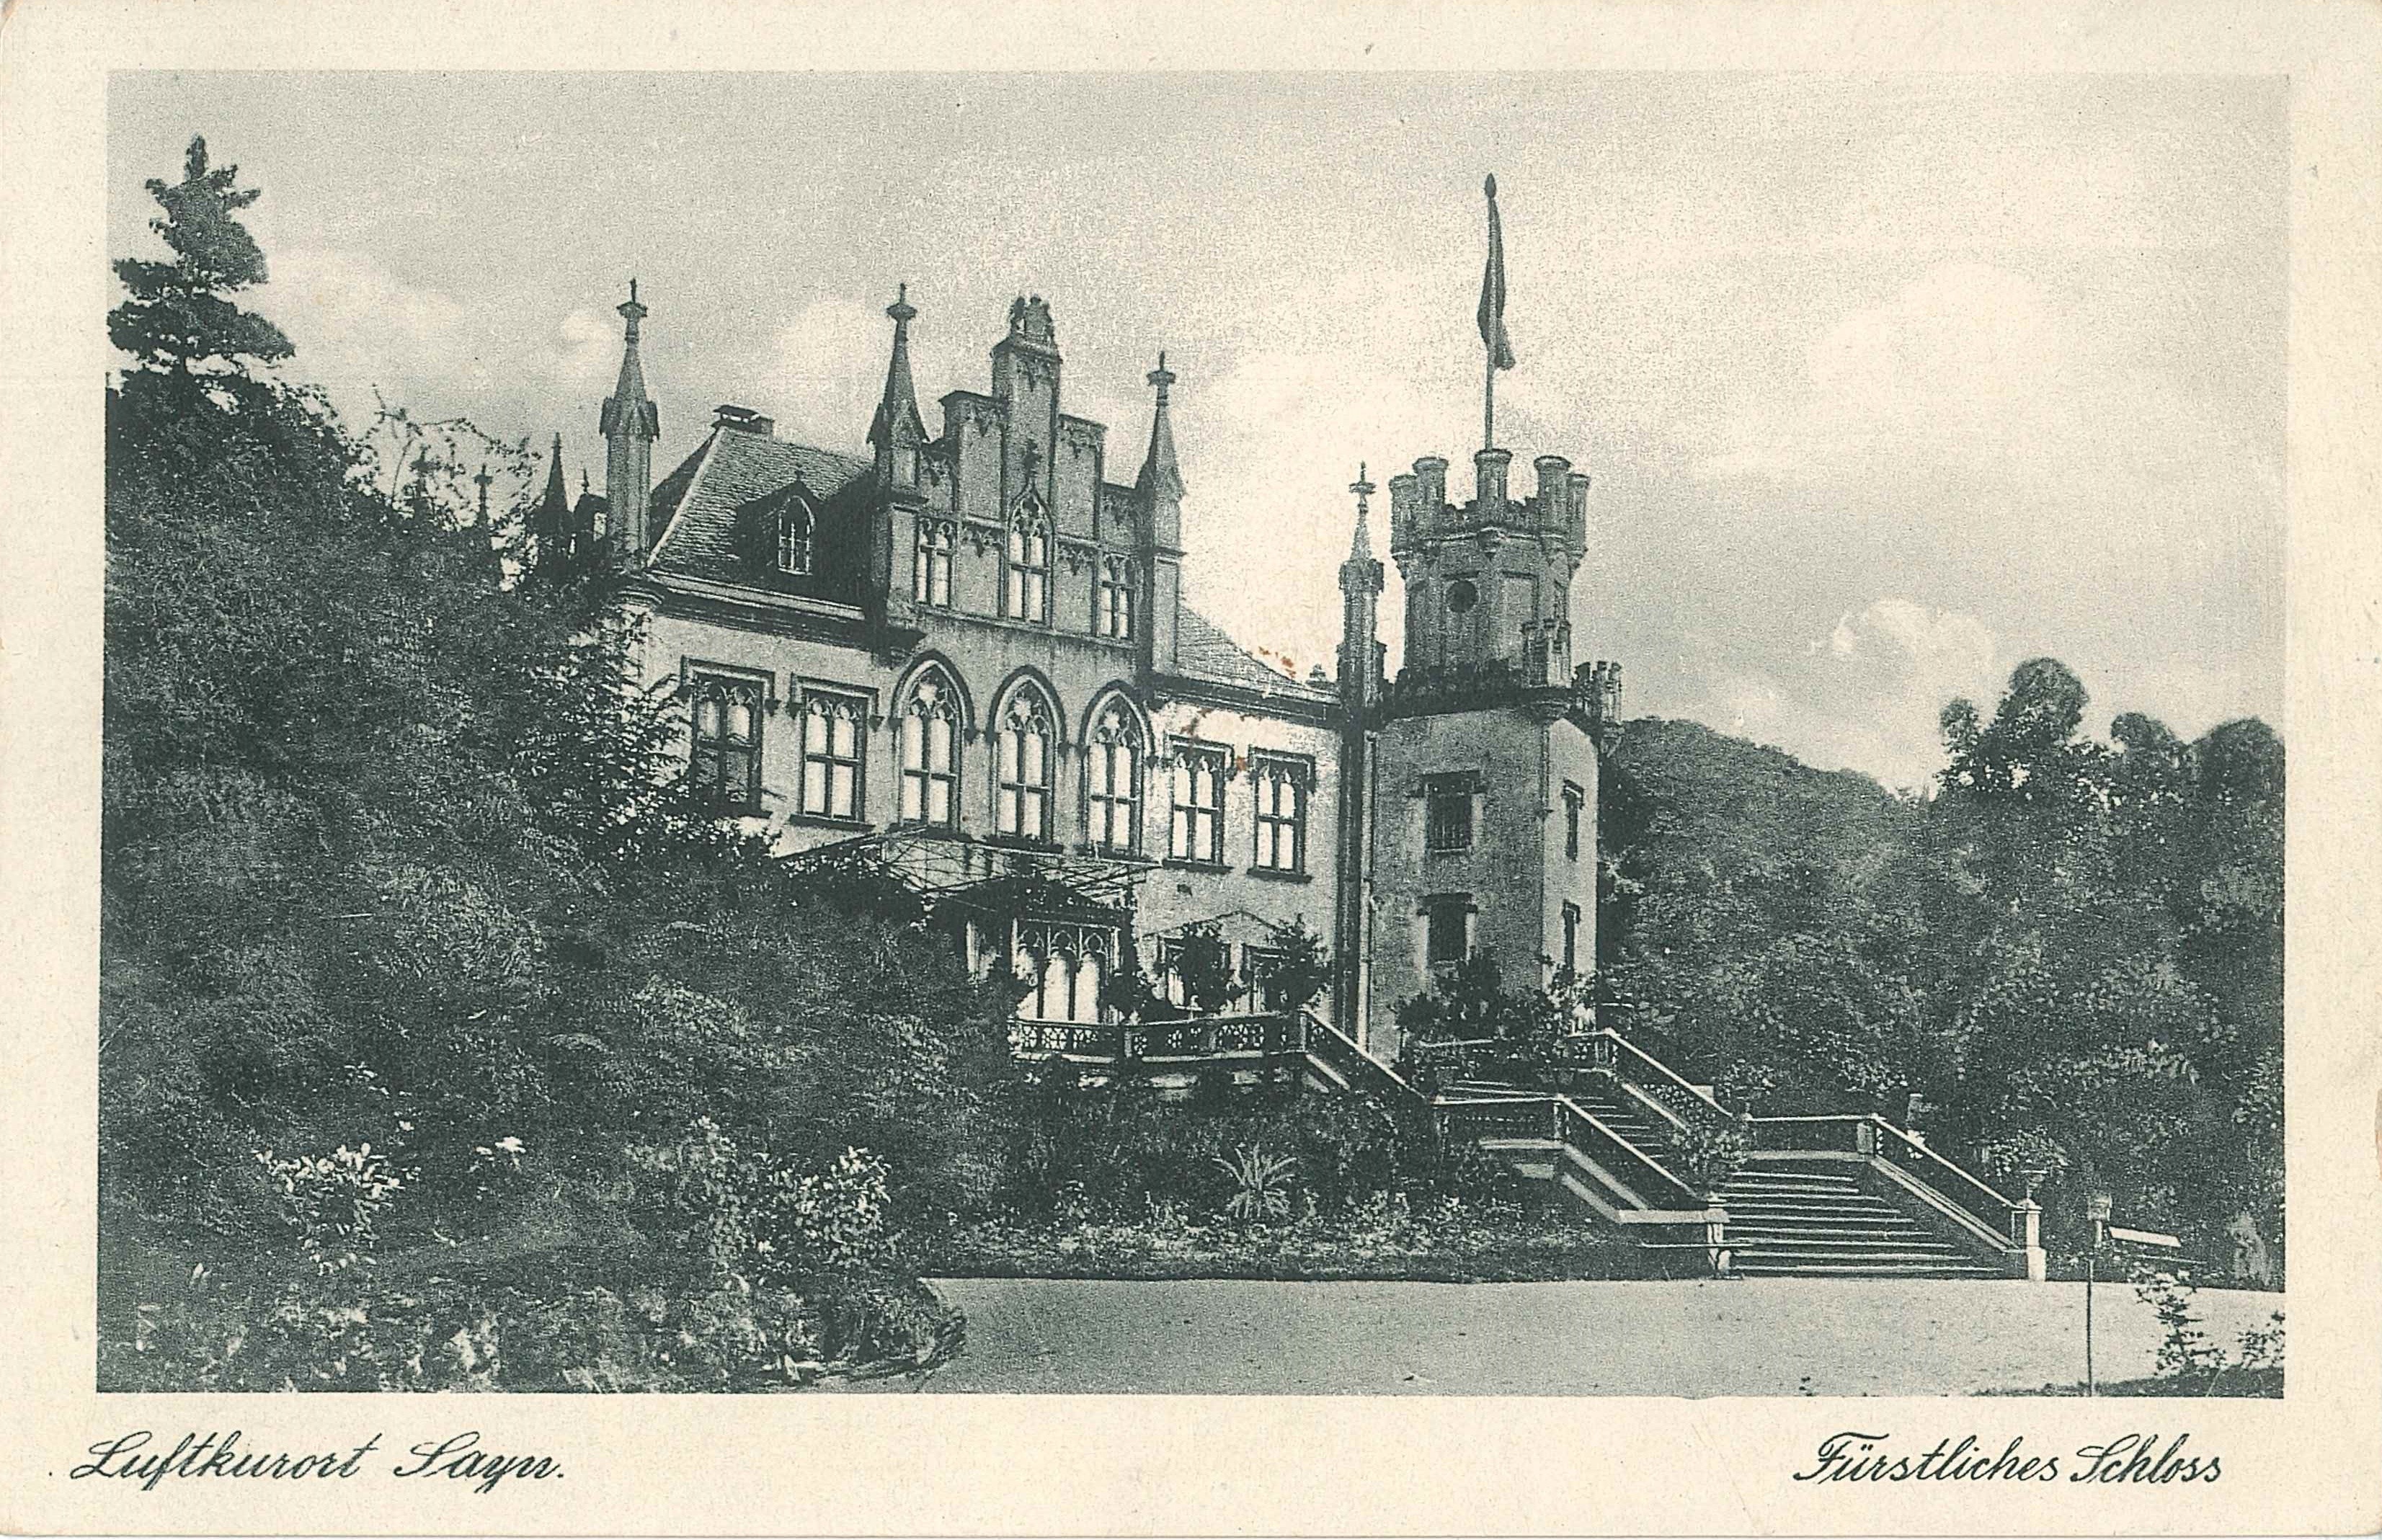 Blick auf Schloss Sayn, Bendorf-Sayn, vor 1945 (REM CC BY-NC-SA)